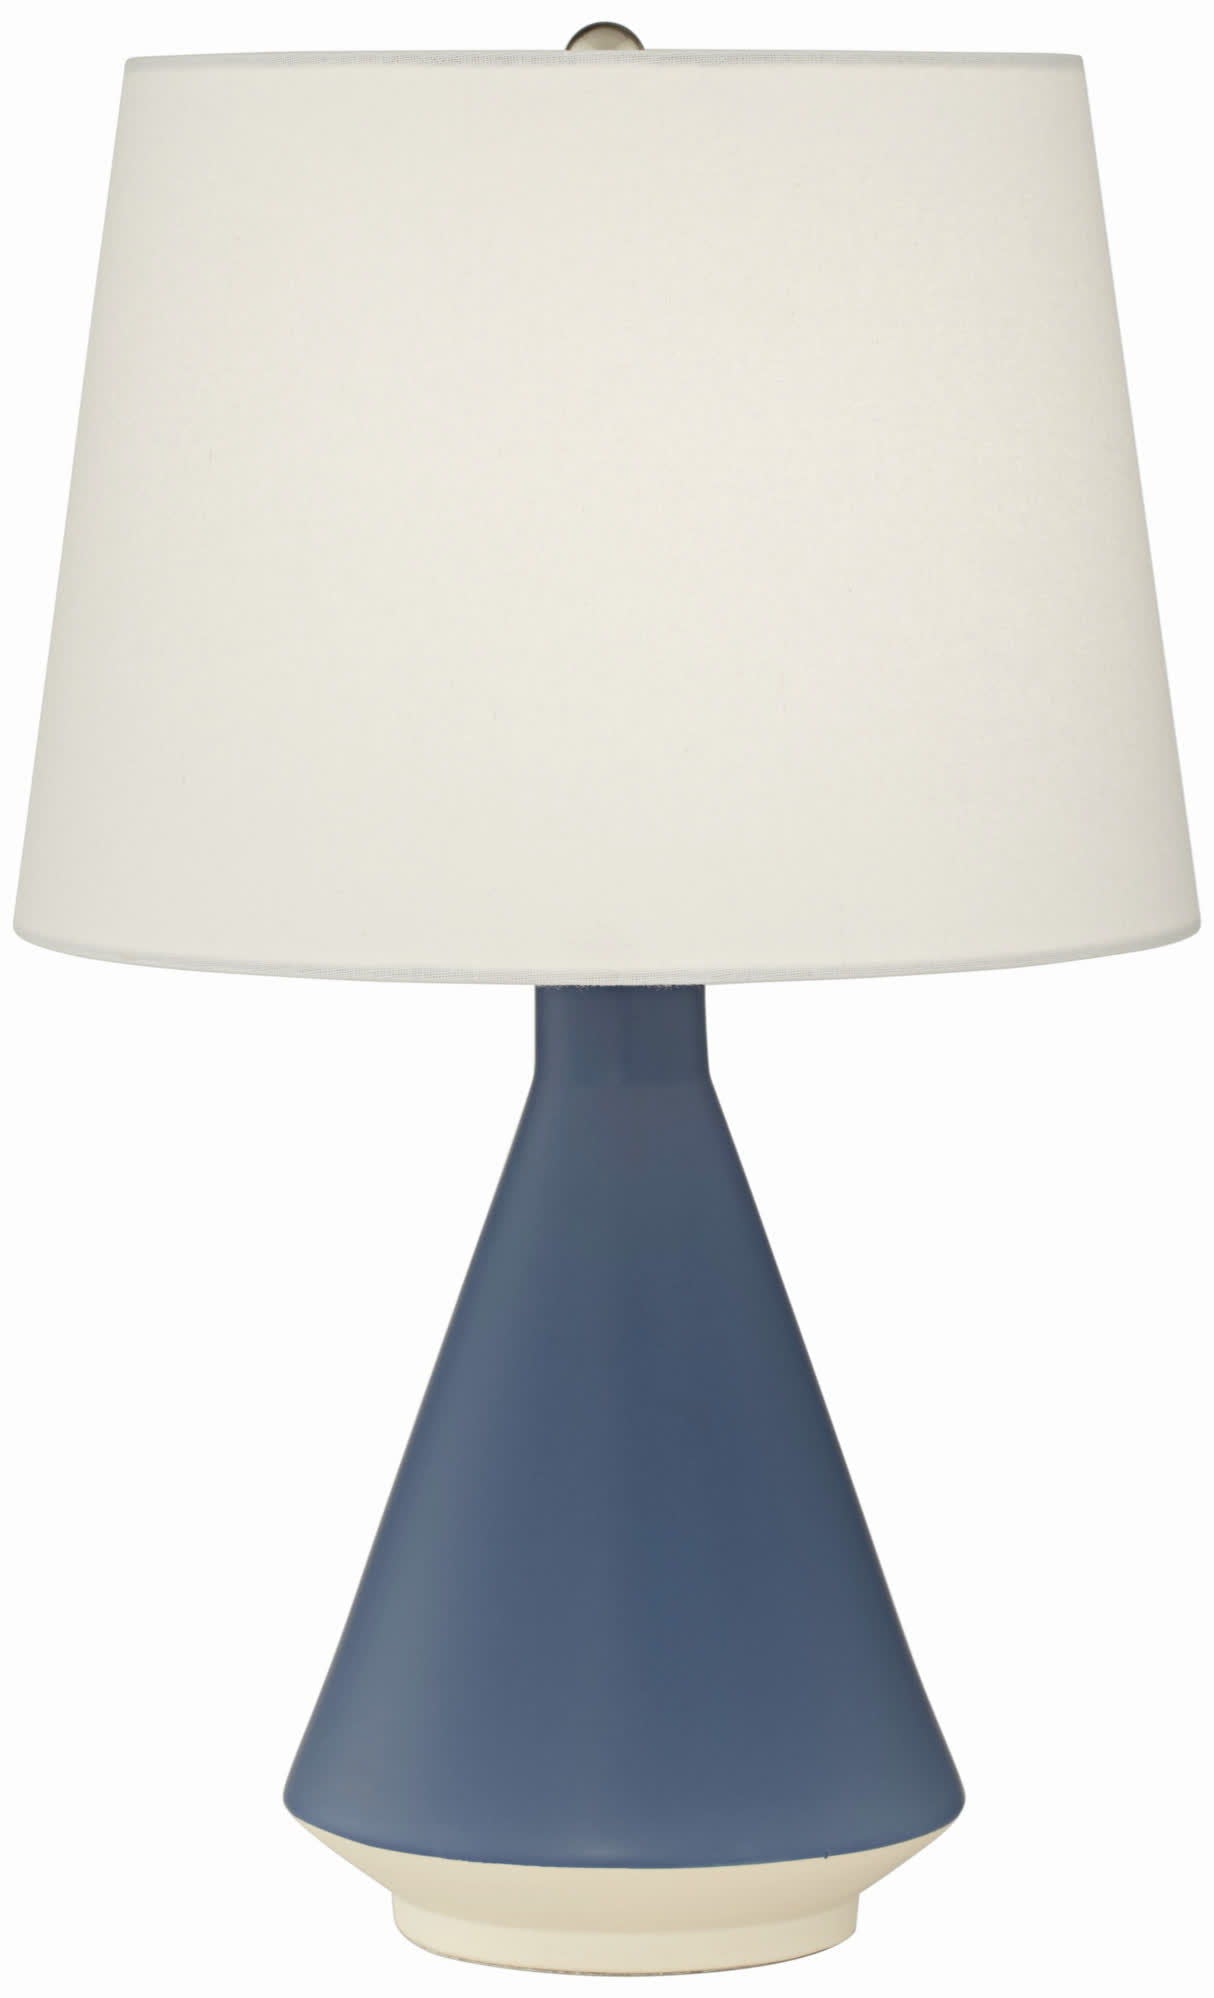 Brooks - Table Lamp - Regatta Blue